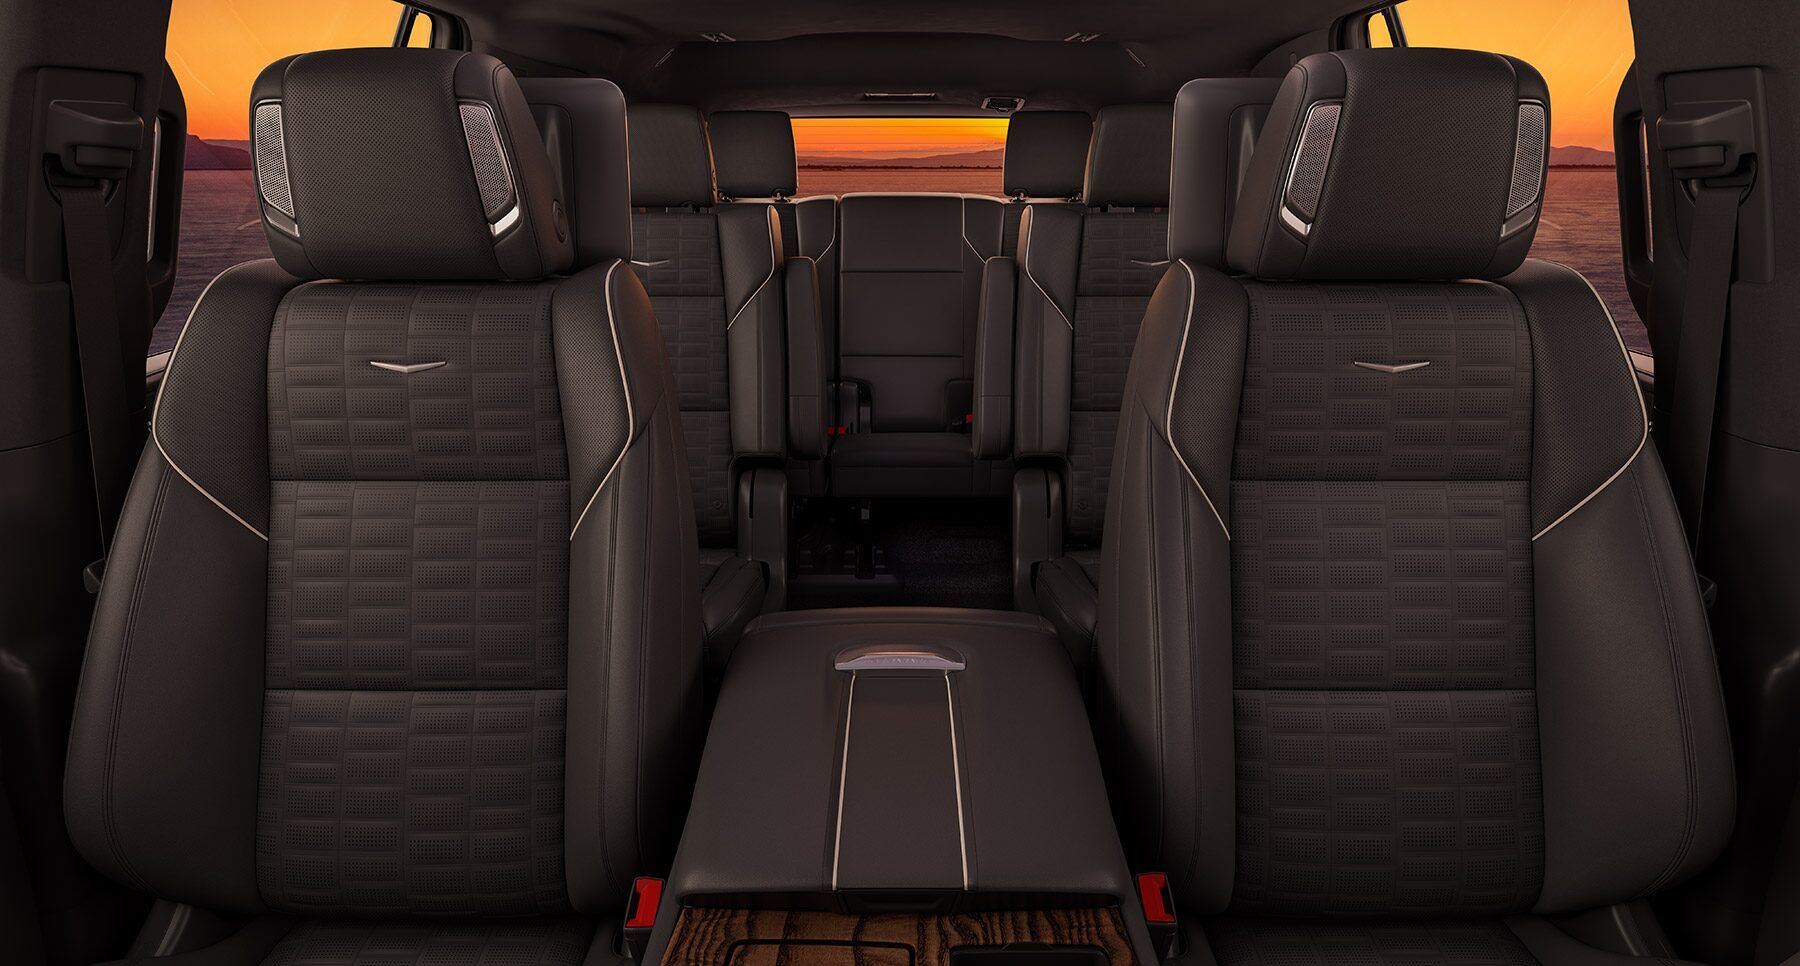 Interior of the 2023 Cadillac Escalade including its 7 seats.